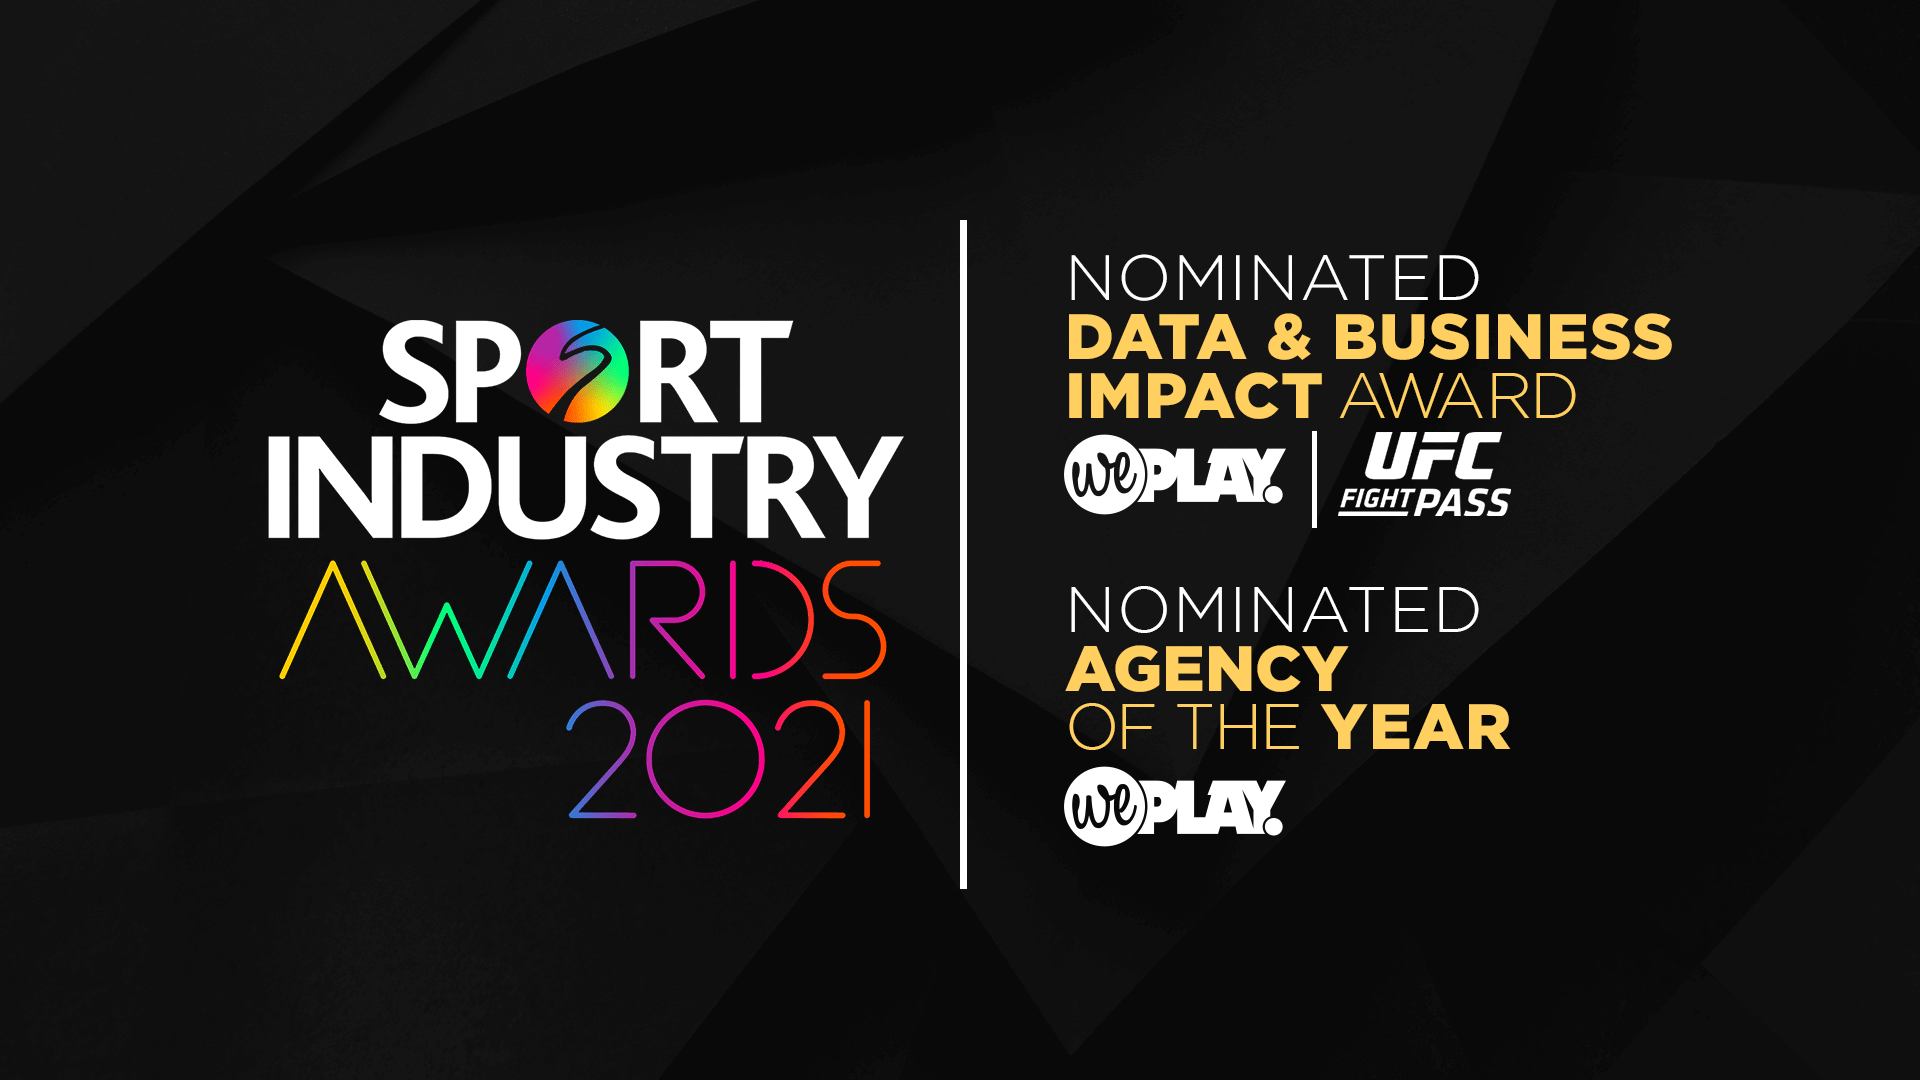 Sport industry awards poster